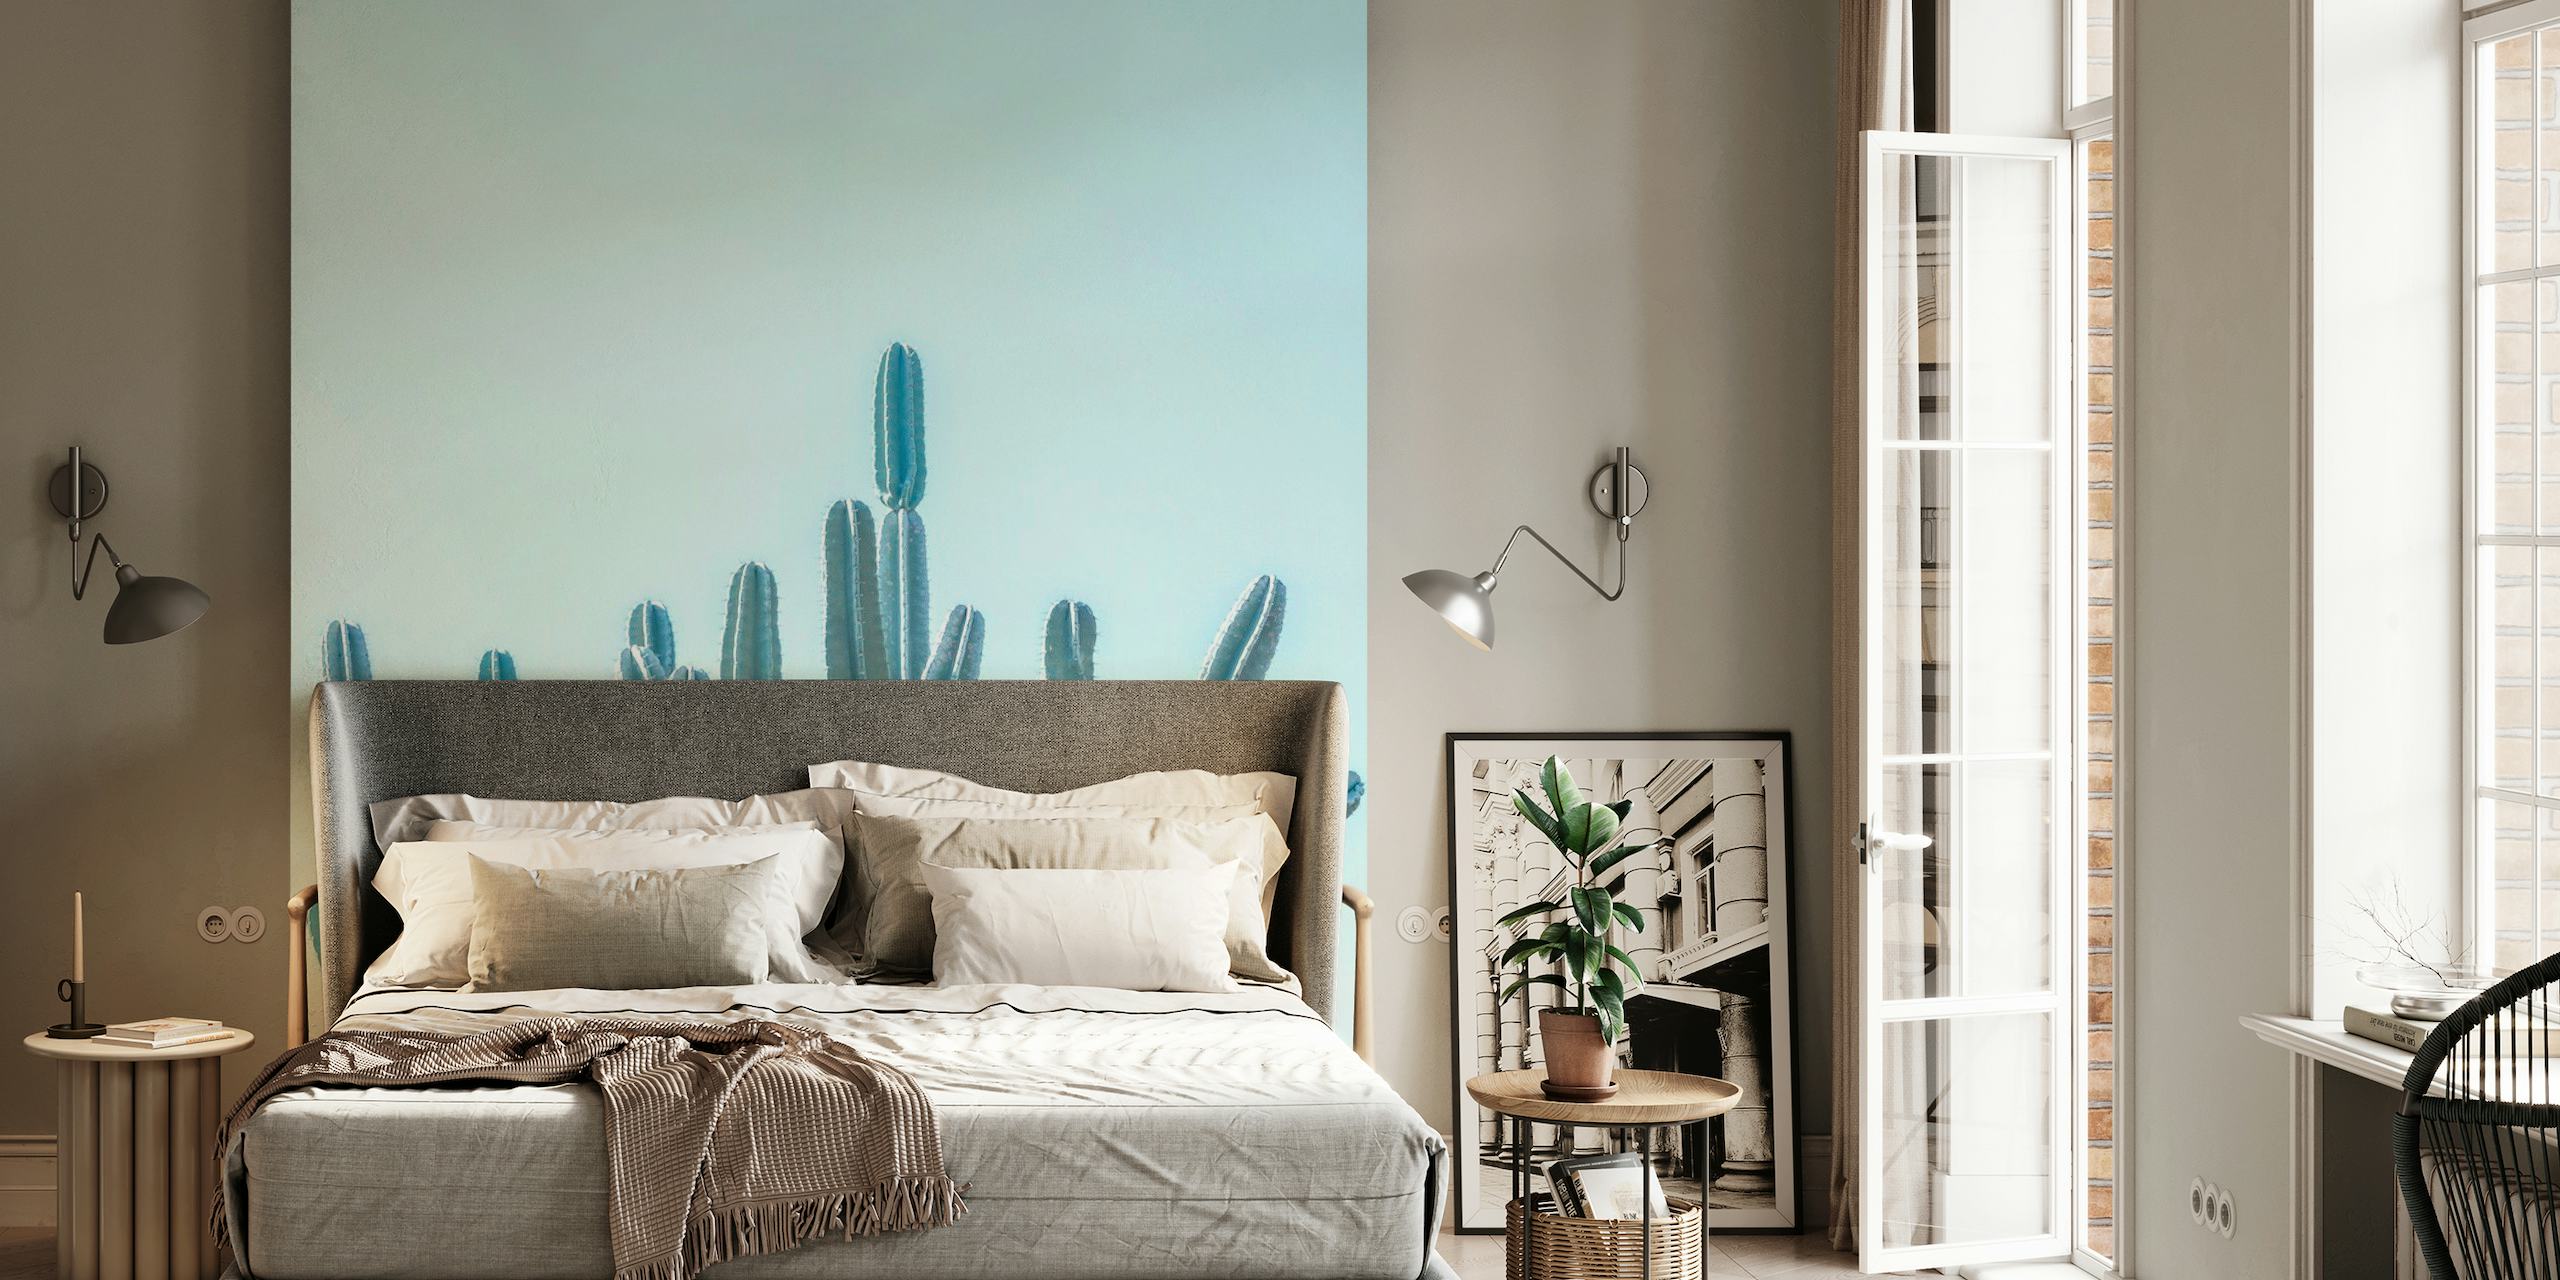 Fotomural minimalista de cactus con fondo de cielo azul claro